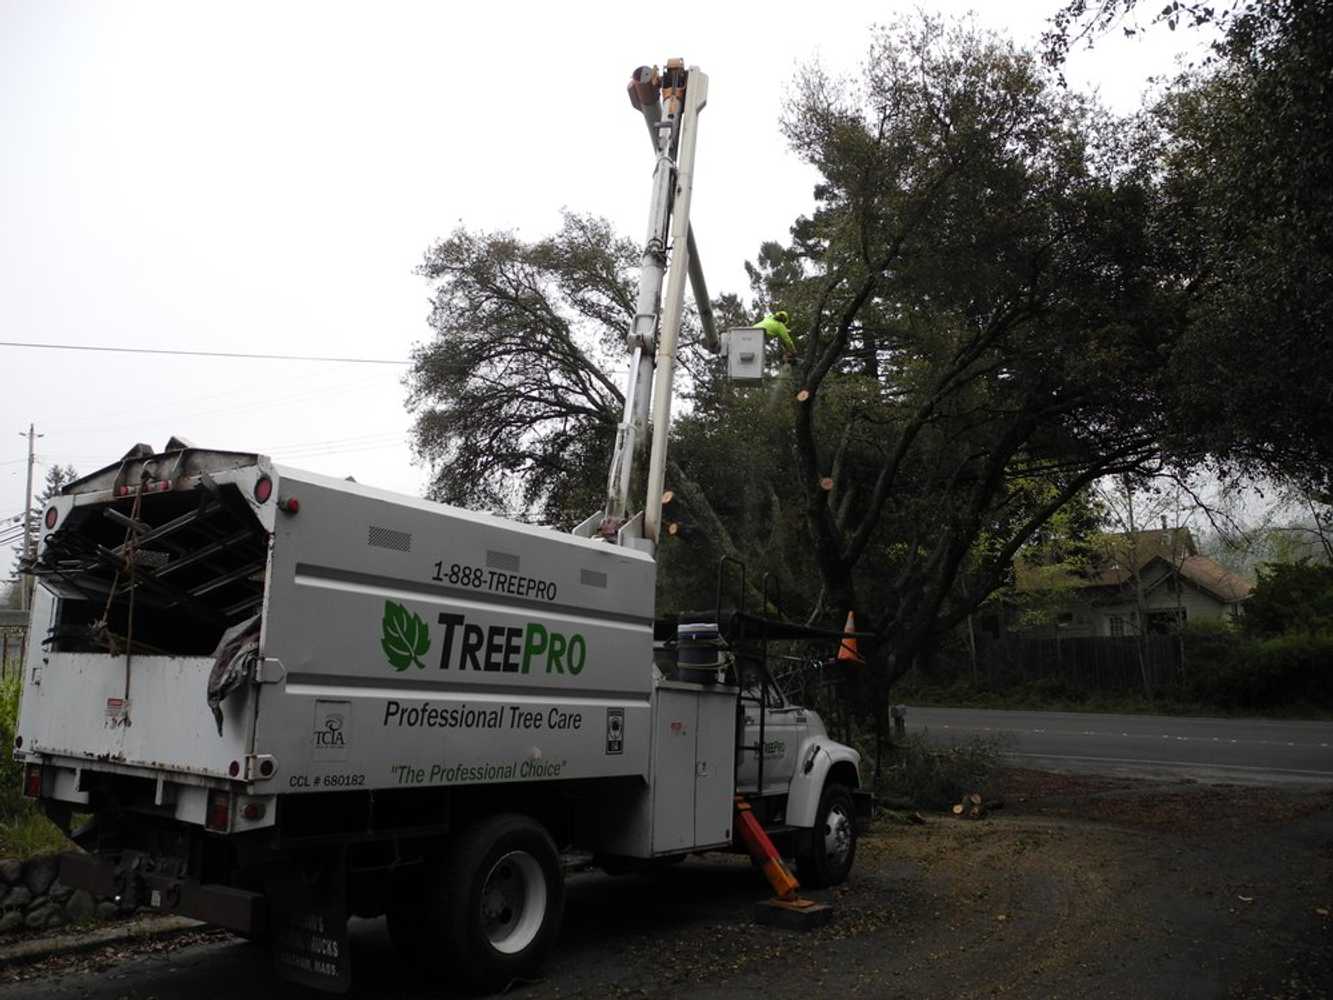 Photos from TreePro Professional Tree Care